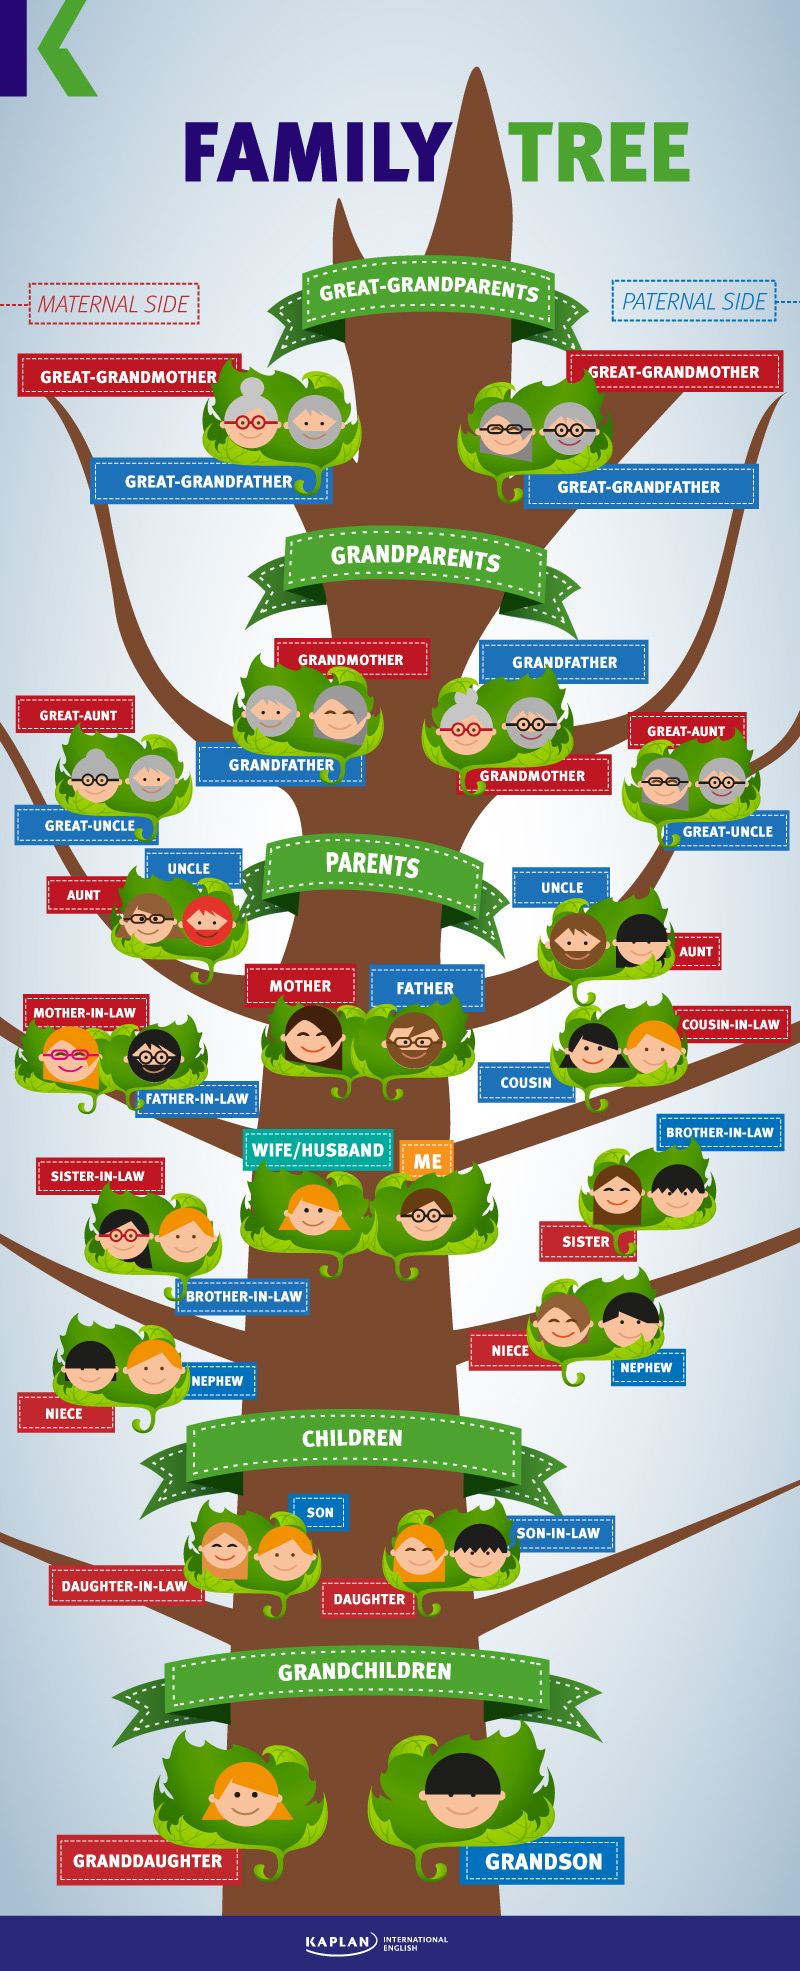 family tree infographic